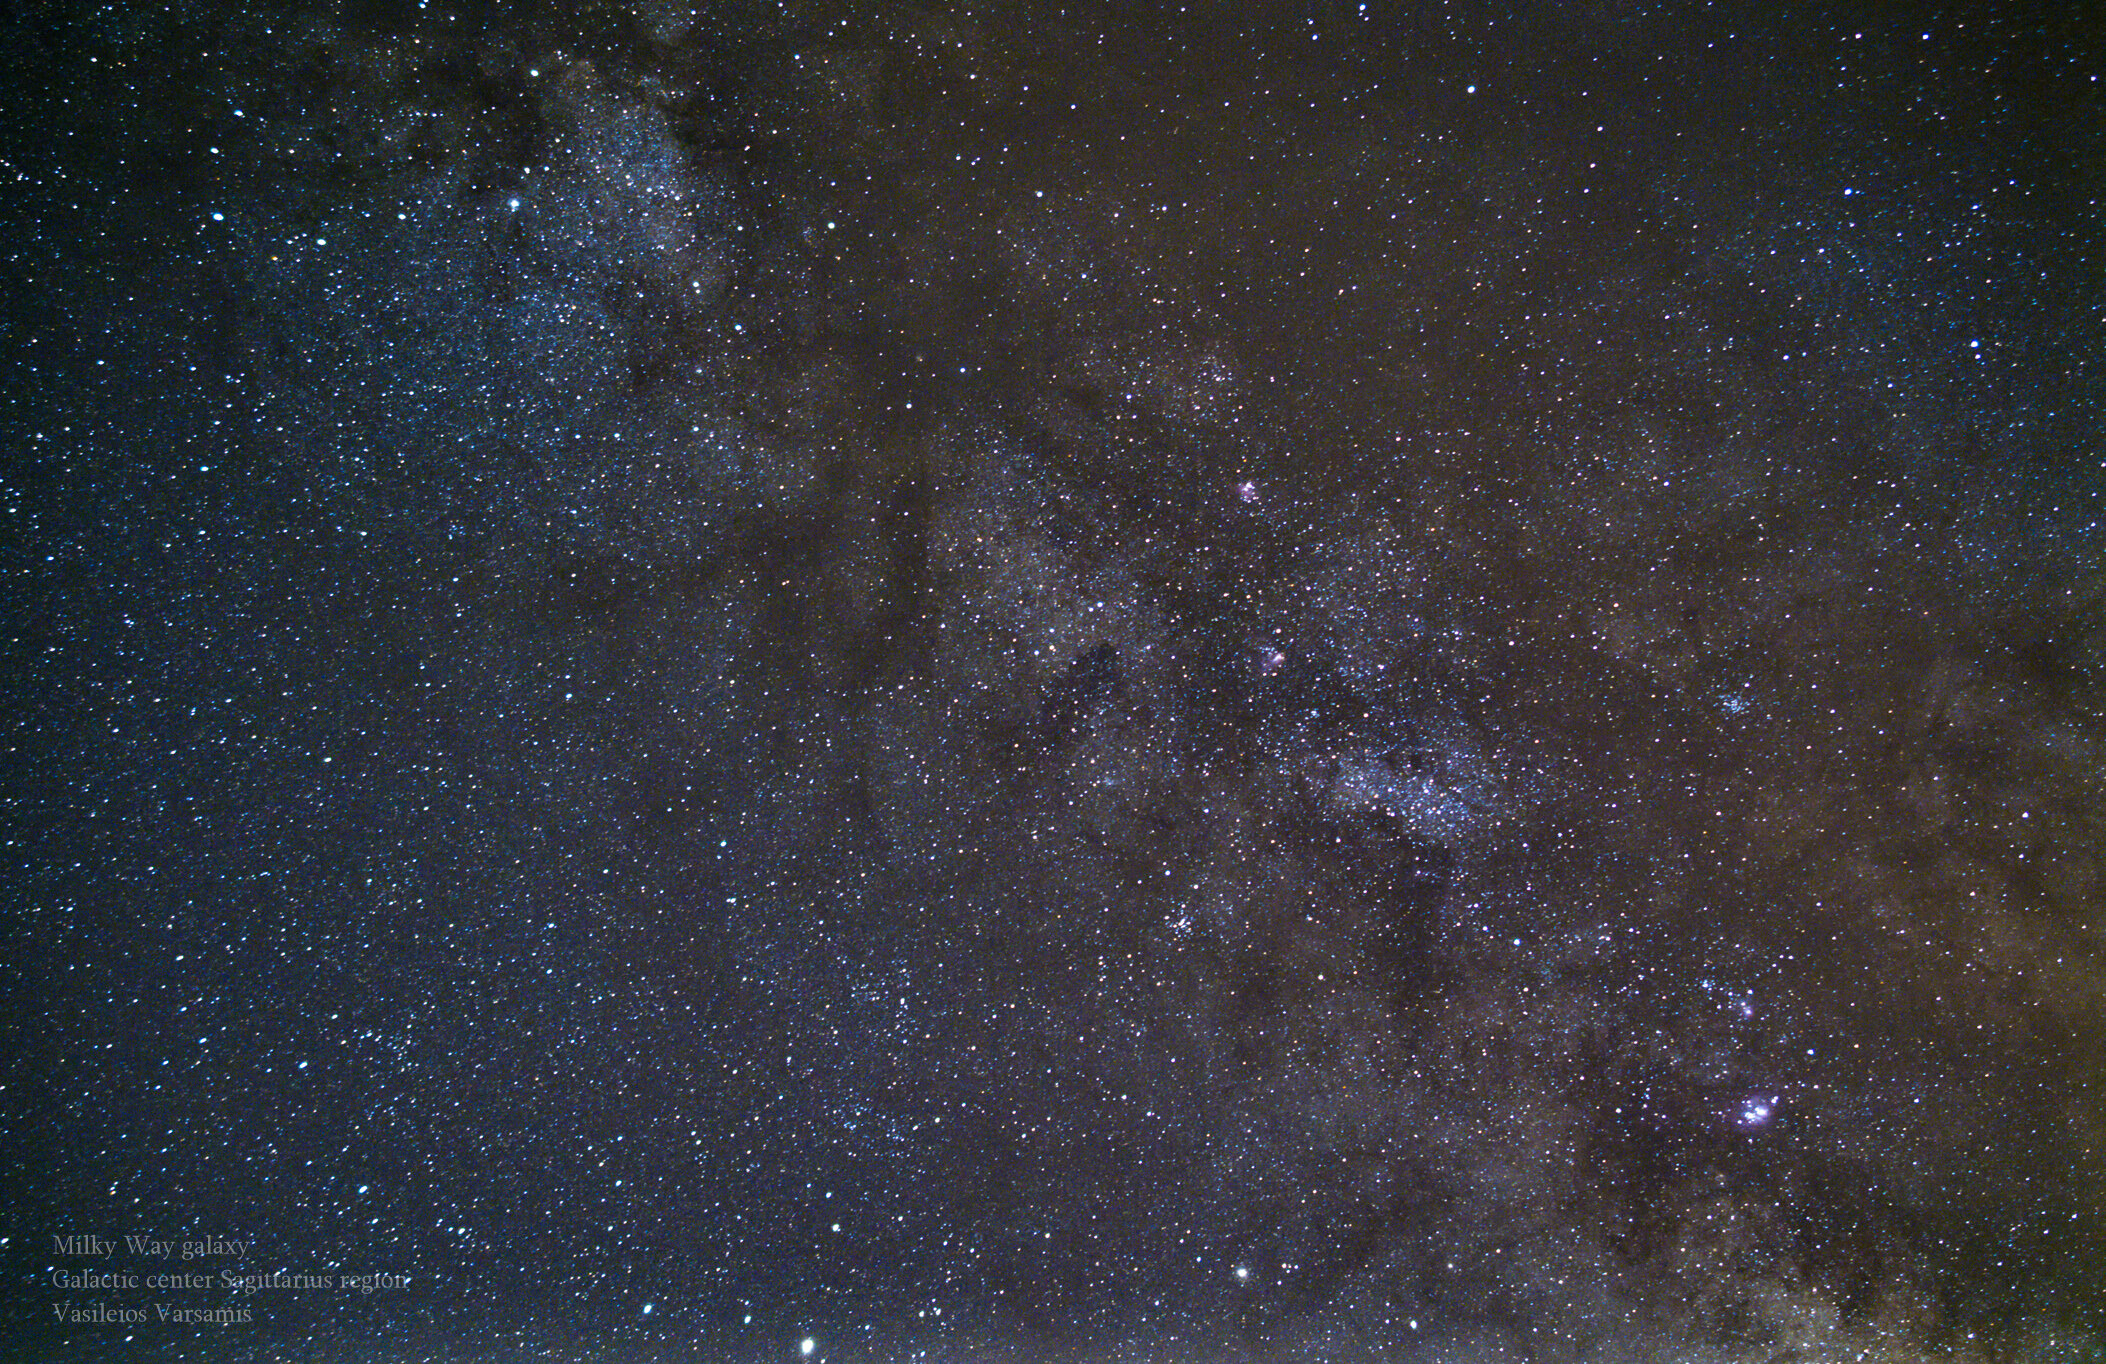 Milky Way - Sgr Region